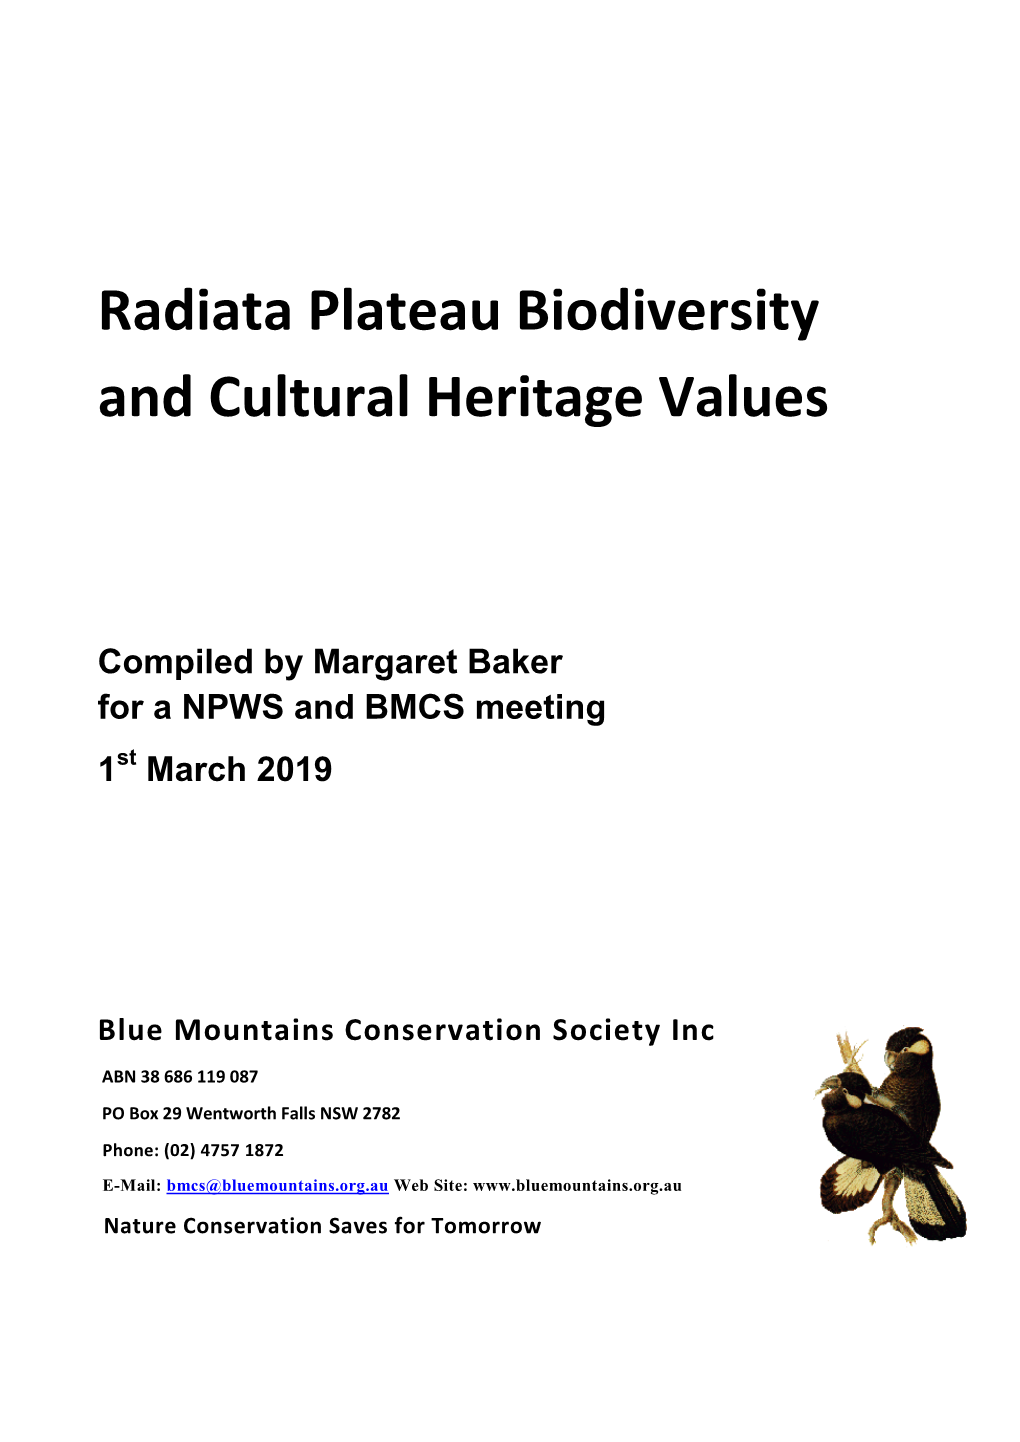 Radiata Plateau Biodiversity and Cultural Heritage Values